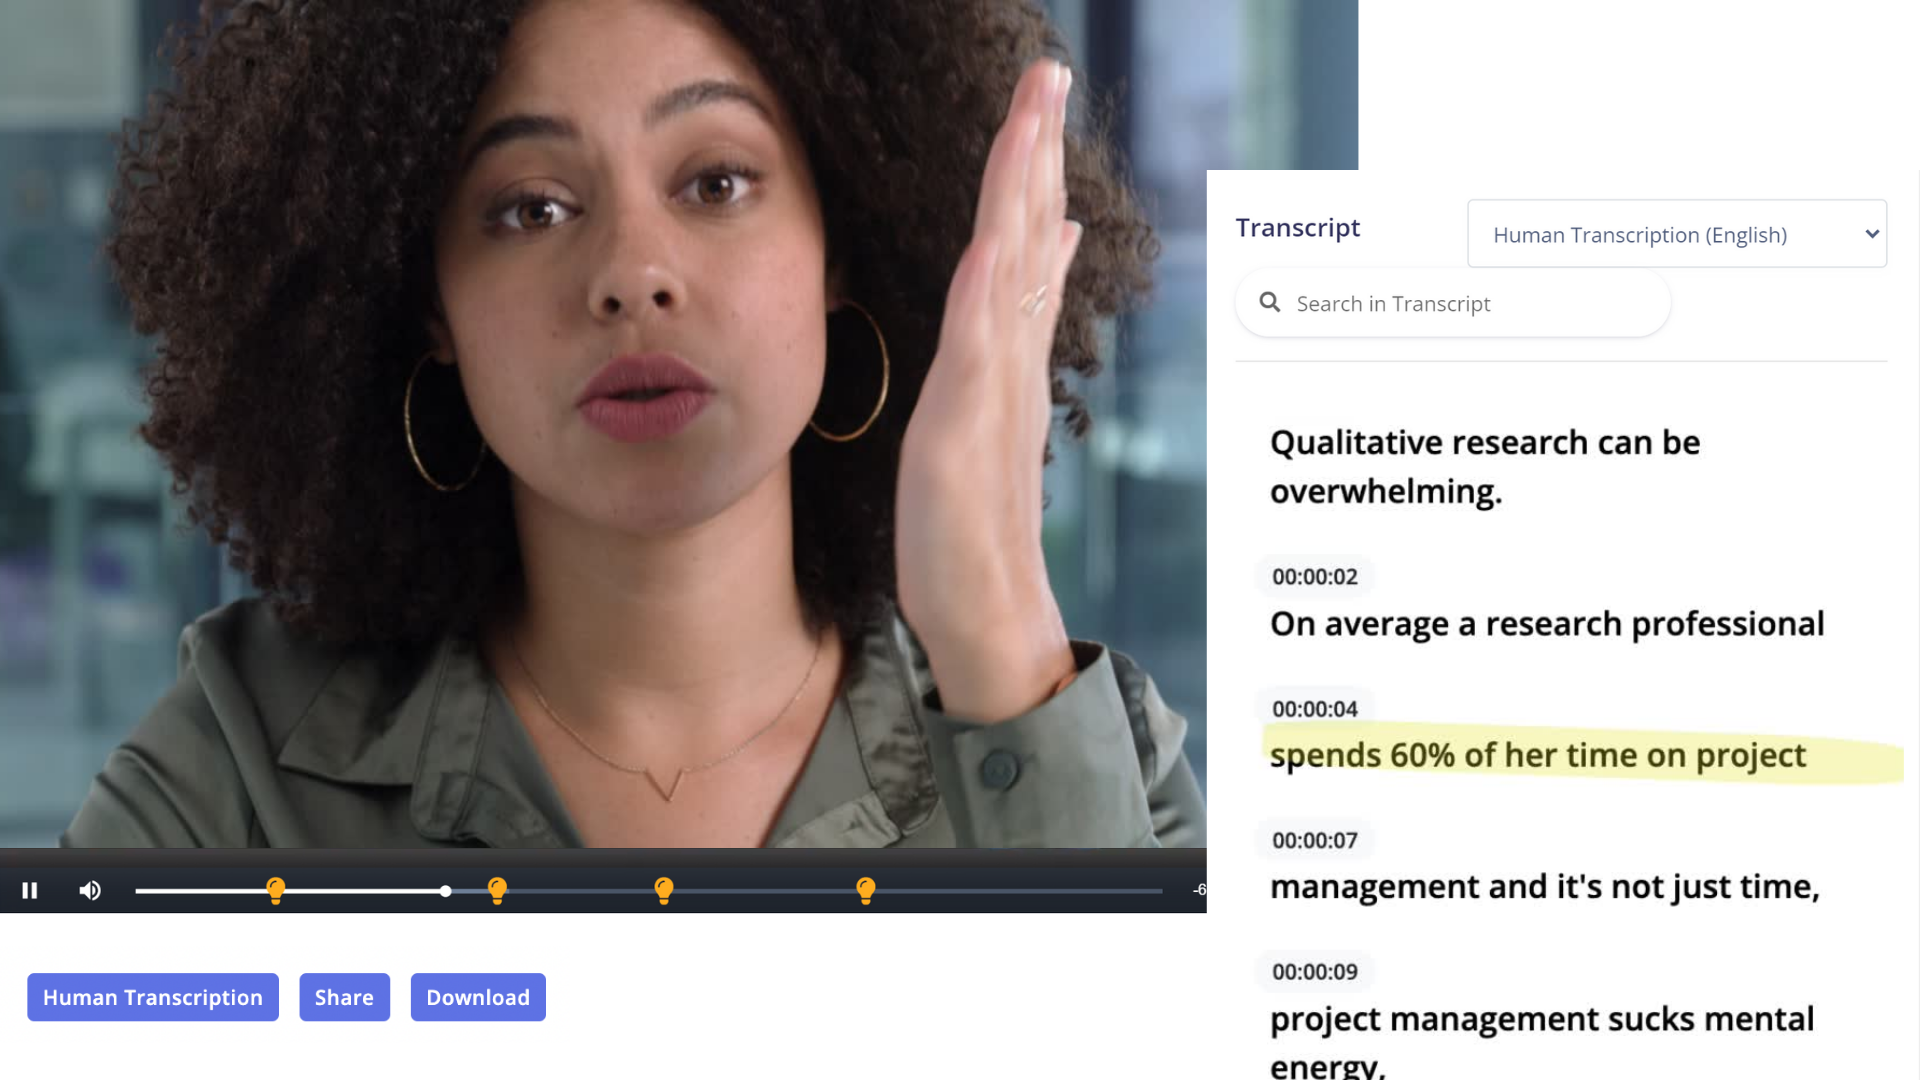 Flowres is an online qualitative research software company with qualitative research capabilities to understand consumer behavior through video interviews.